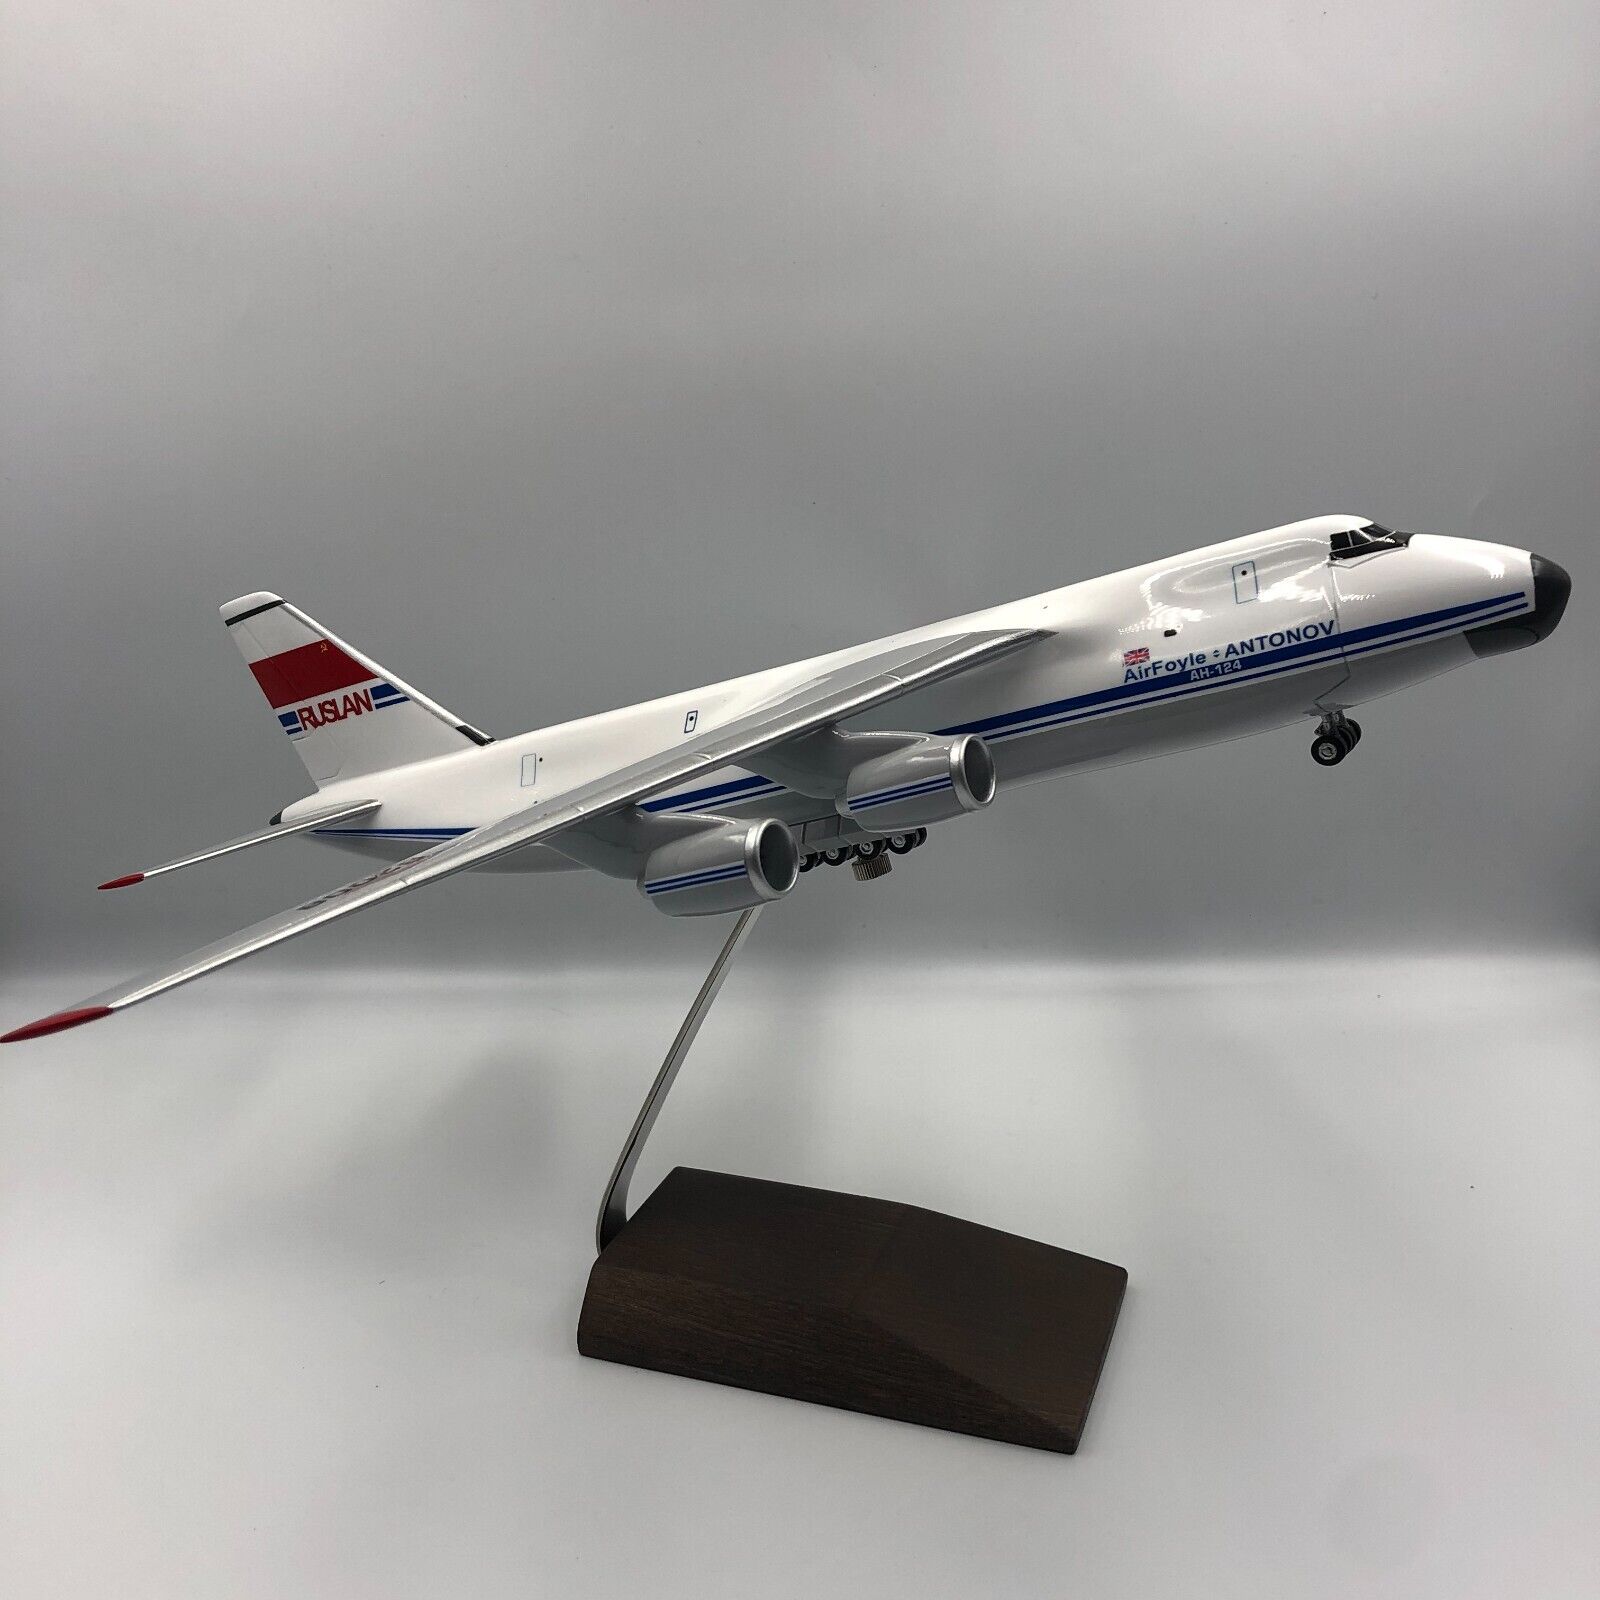 Antonov 124 An-124 Air Foyle HeavyLift, scale 1:200, Nauport, cast resine